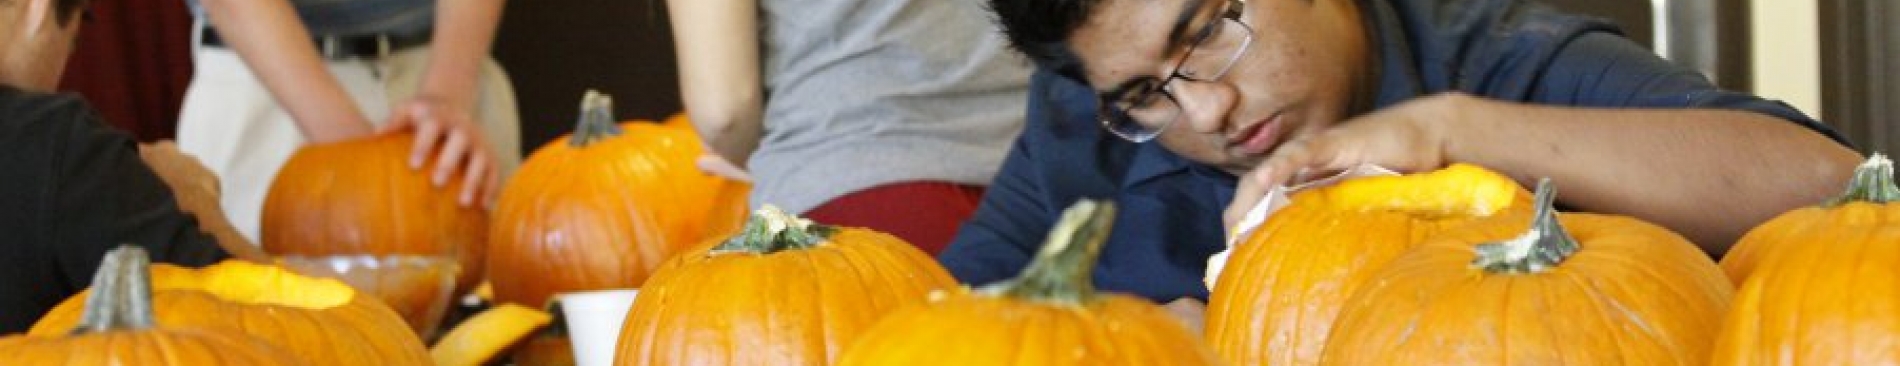 Slideshow: Carving Pumpkins